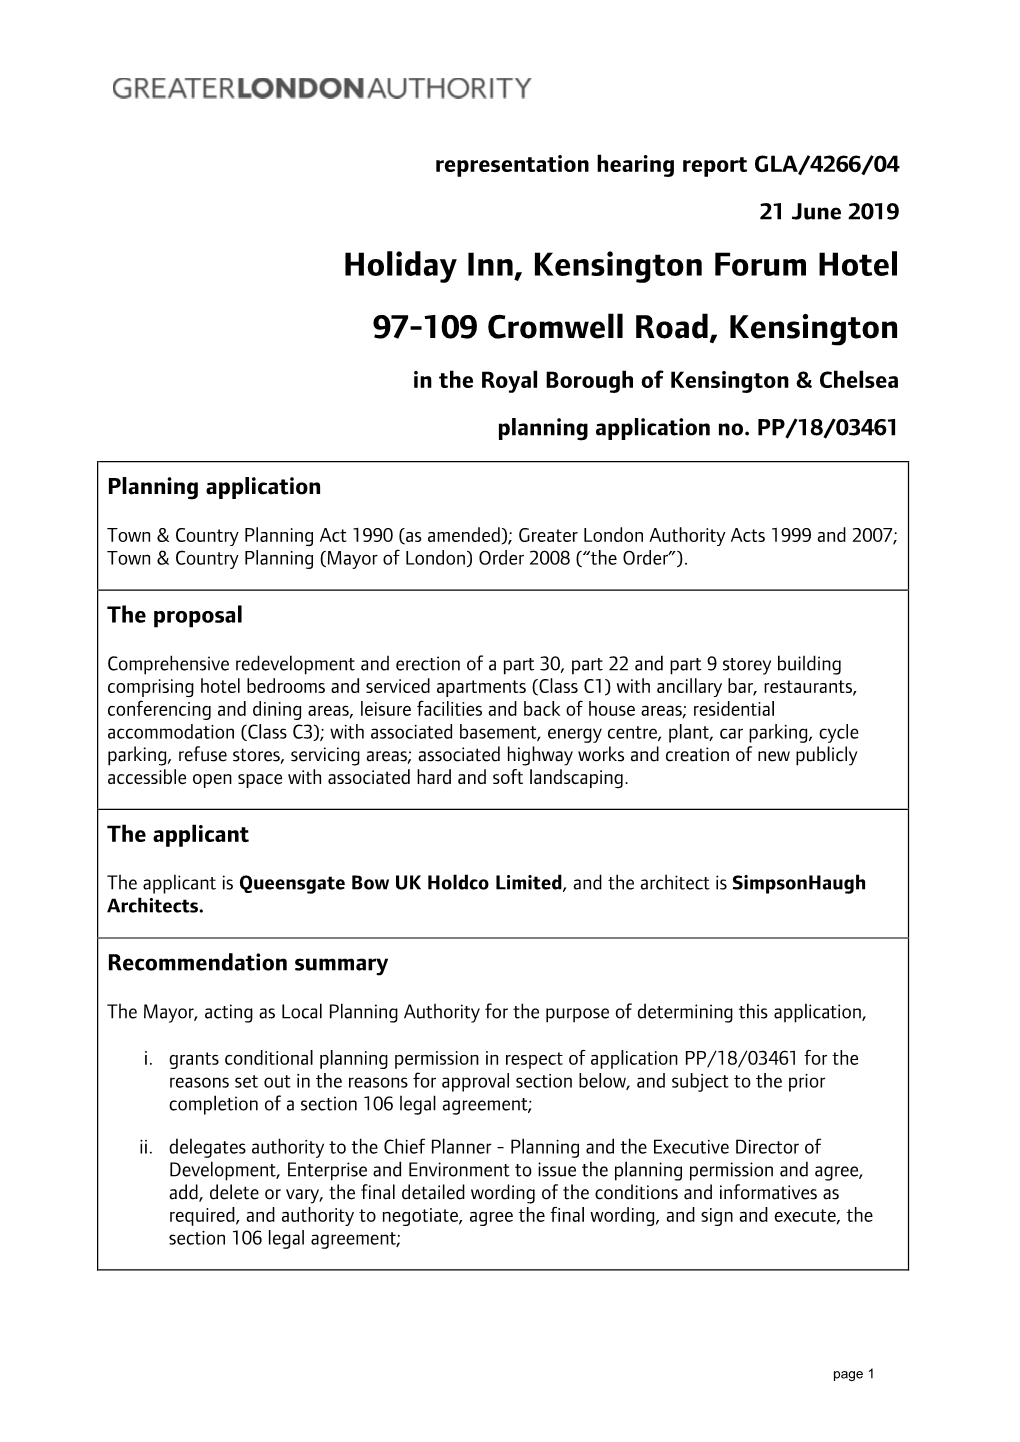 Holiday Inn, Kensington Forum Hotel 97-109 Cromwell Road, Kensington in the Royal Borough of Kensington & Chelsea Planning Application No